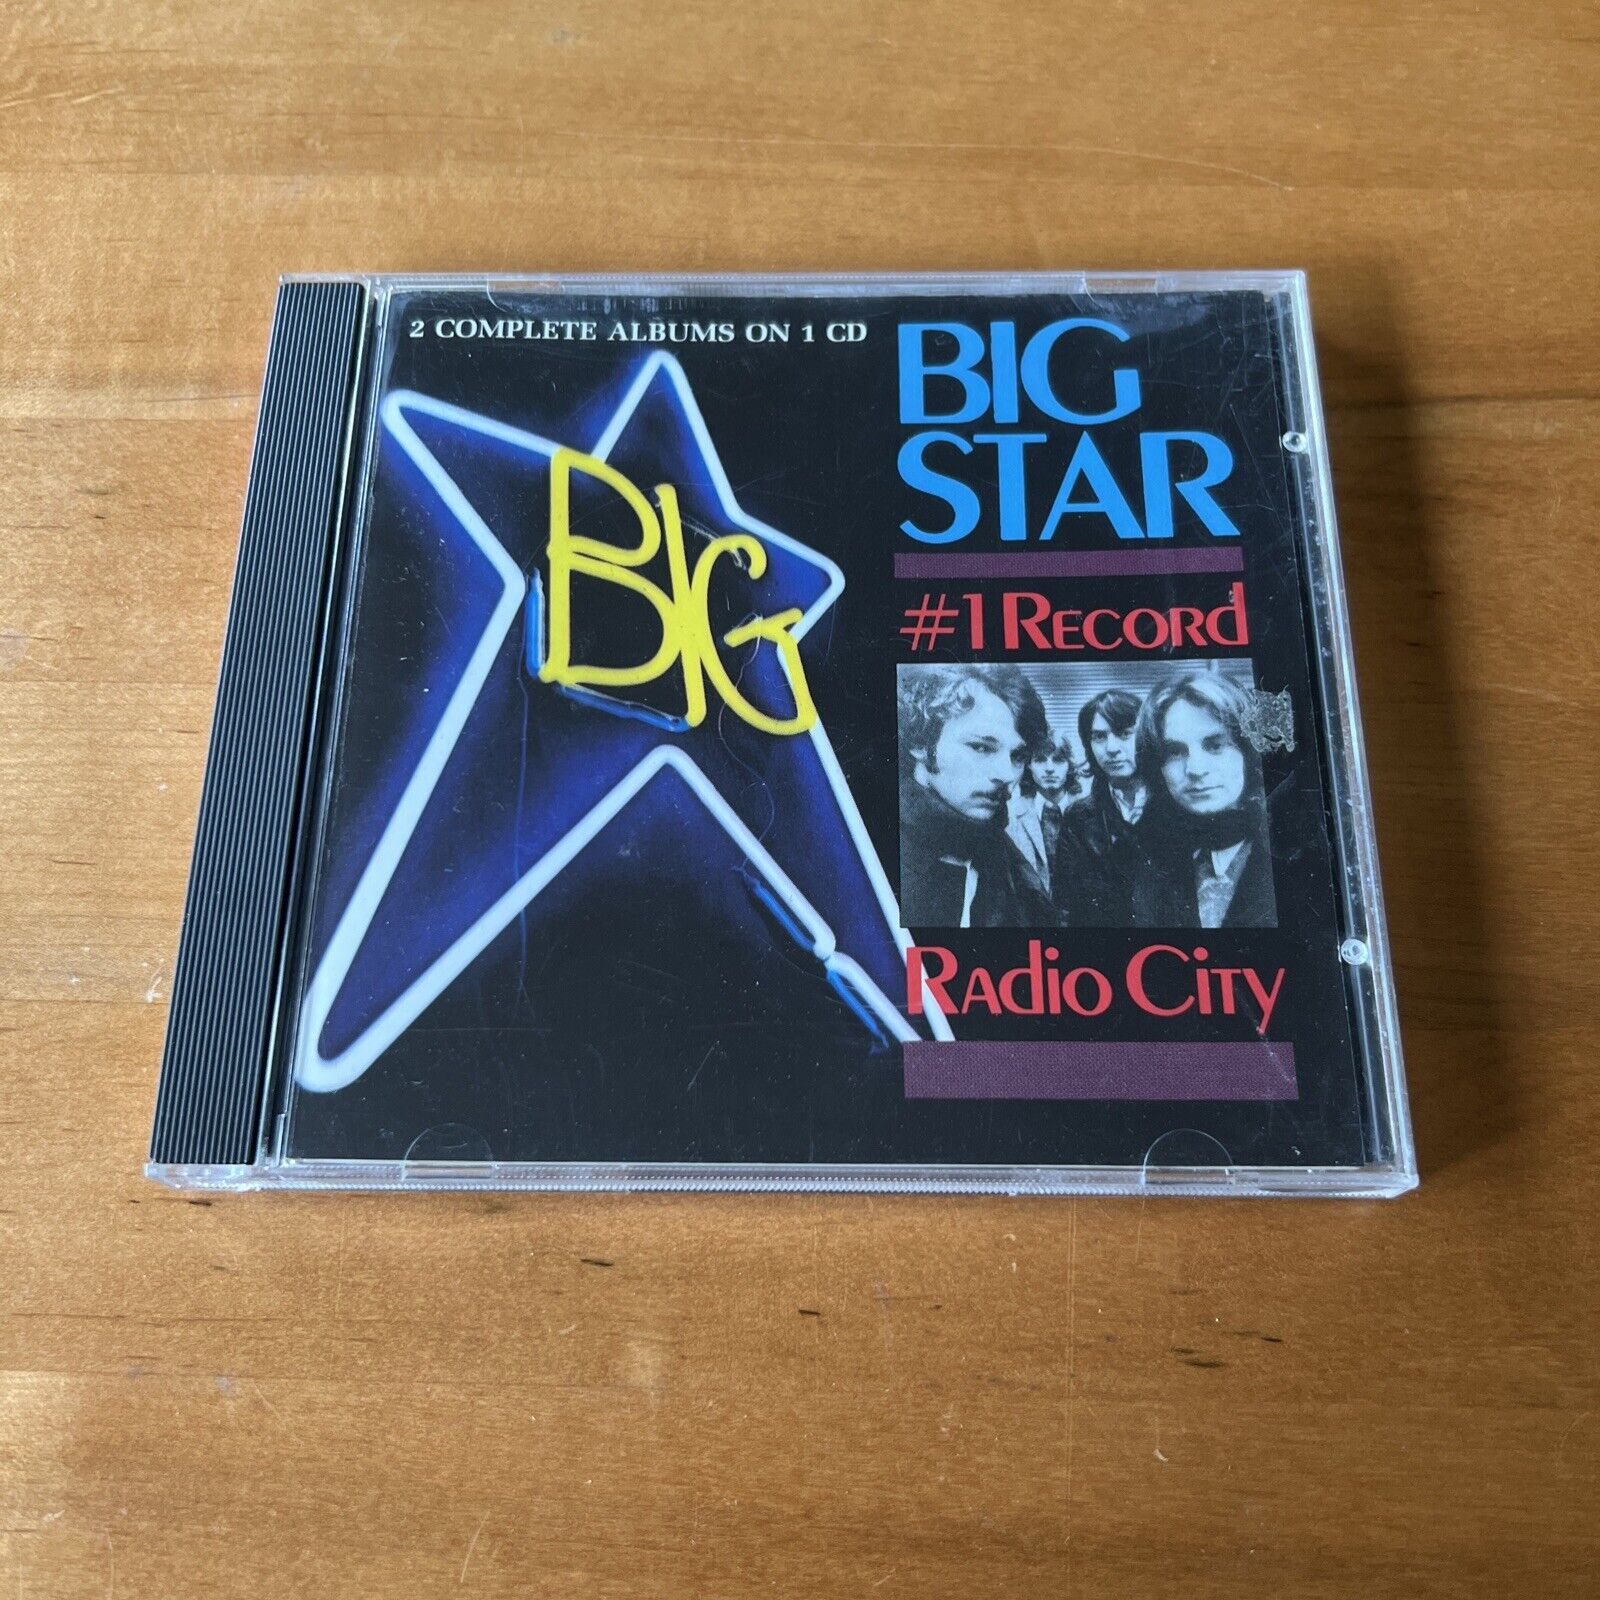 BIG STAR CD “#1 Record/Radio City” like Nick Drake, Wilco, The Byrds.